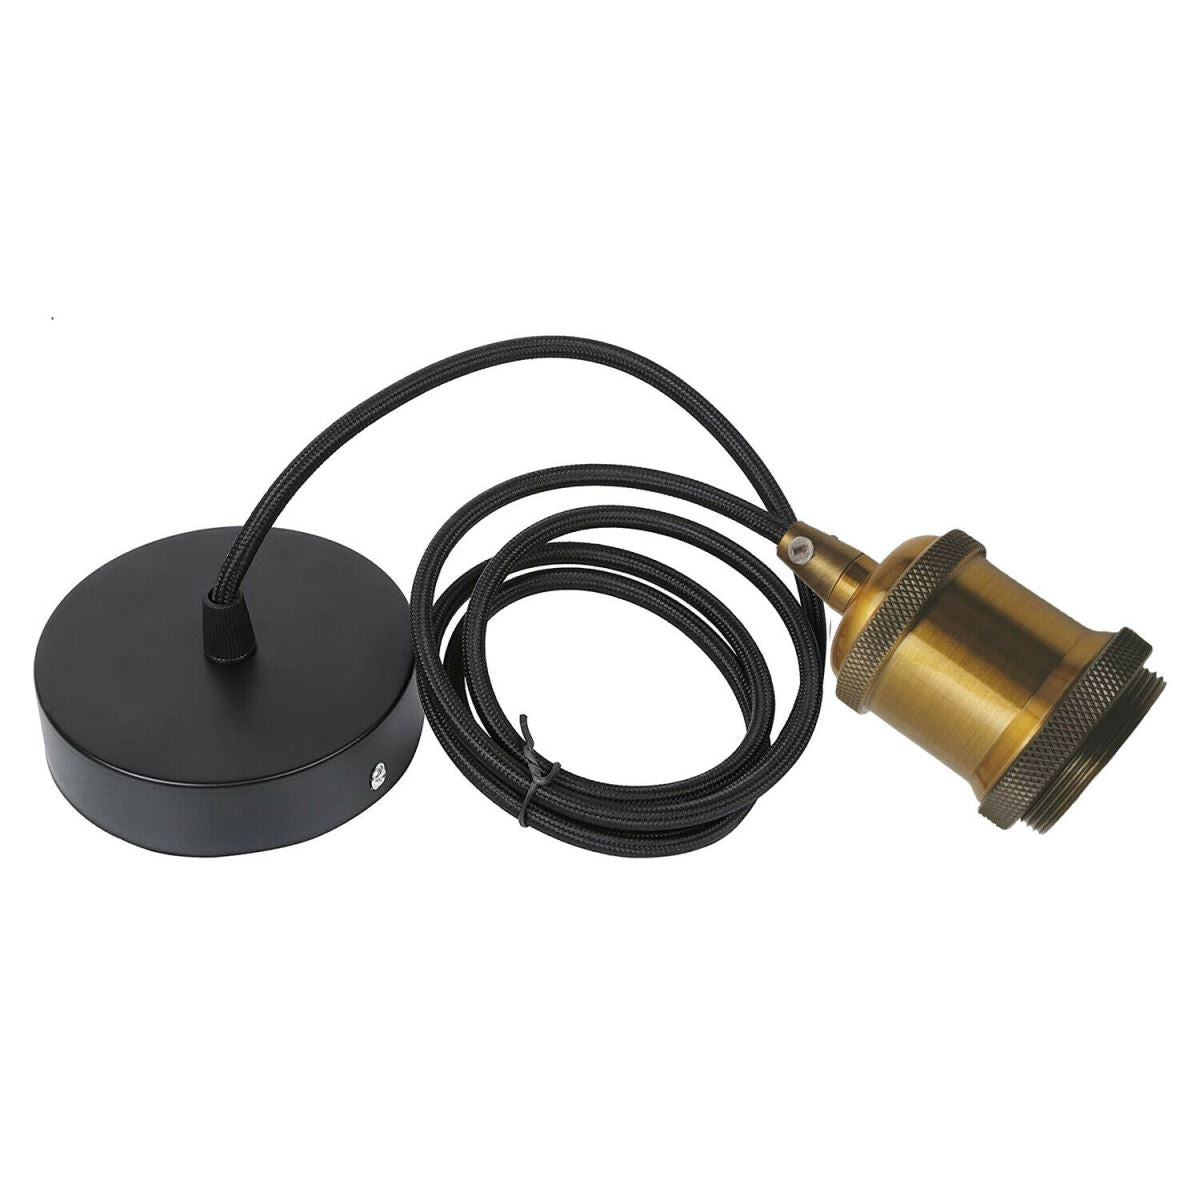 1m E27 Base Black Cable Yellow Brass Holder~1704 - electricalsone UK Ltd